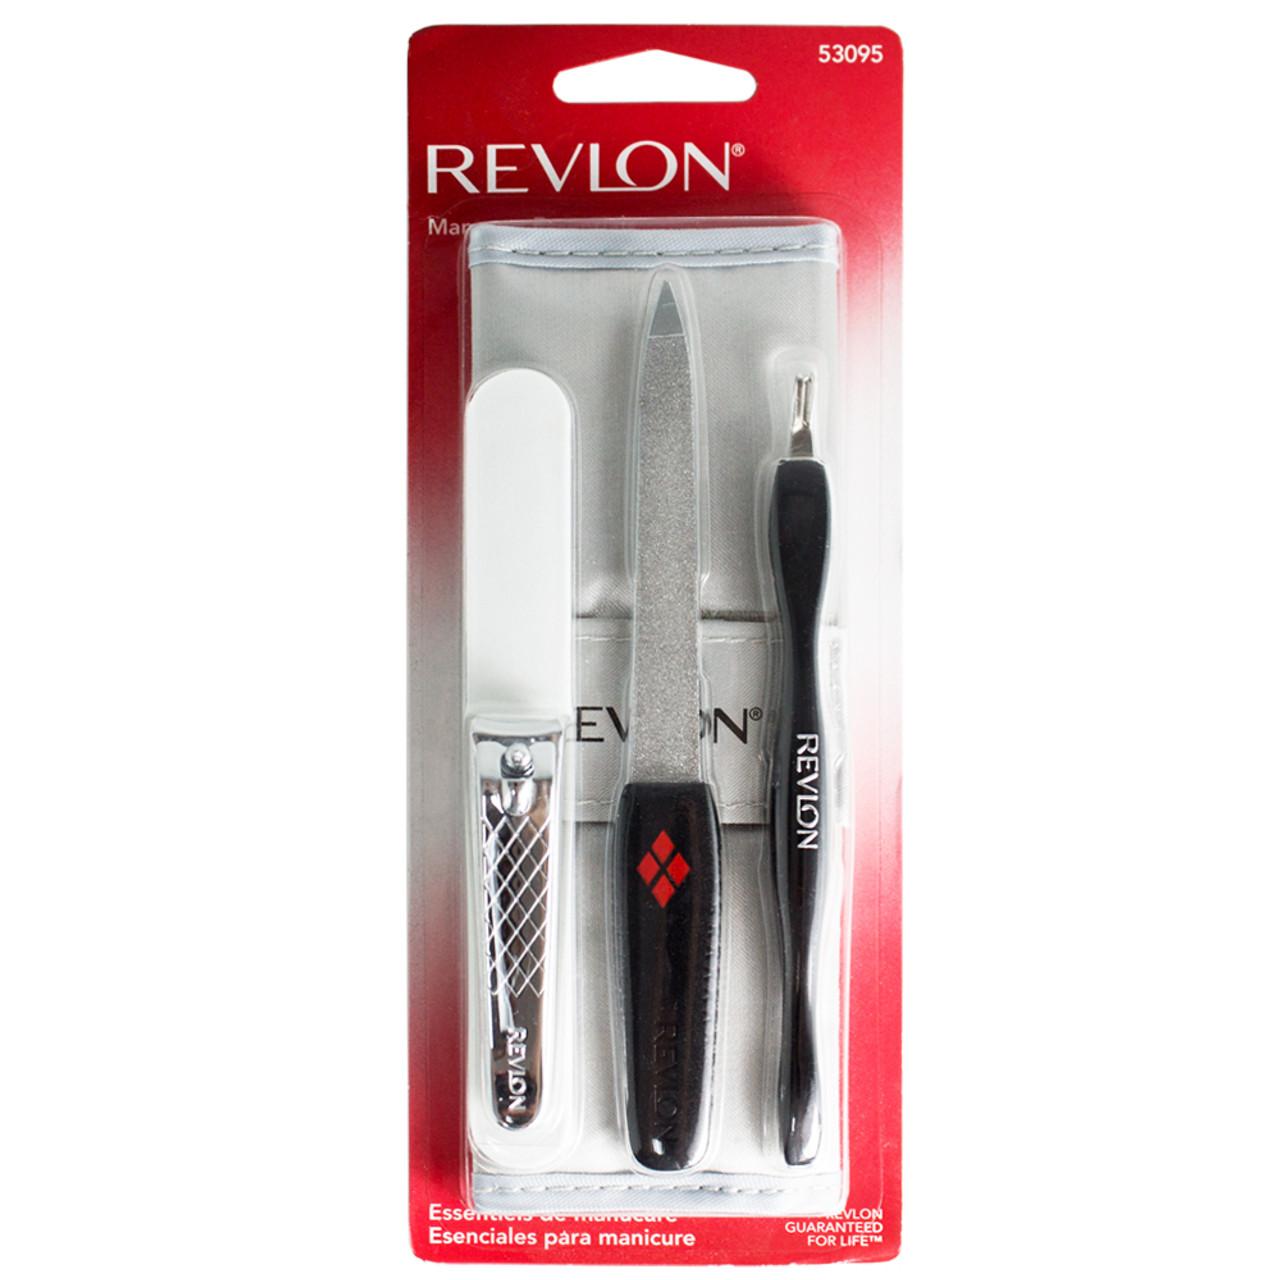 Revlon 4 Piece Manicure Kit with Nylon Case, Silver - Walmart.com